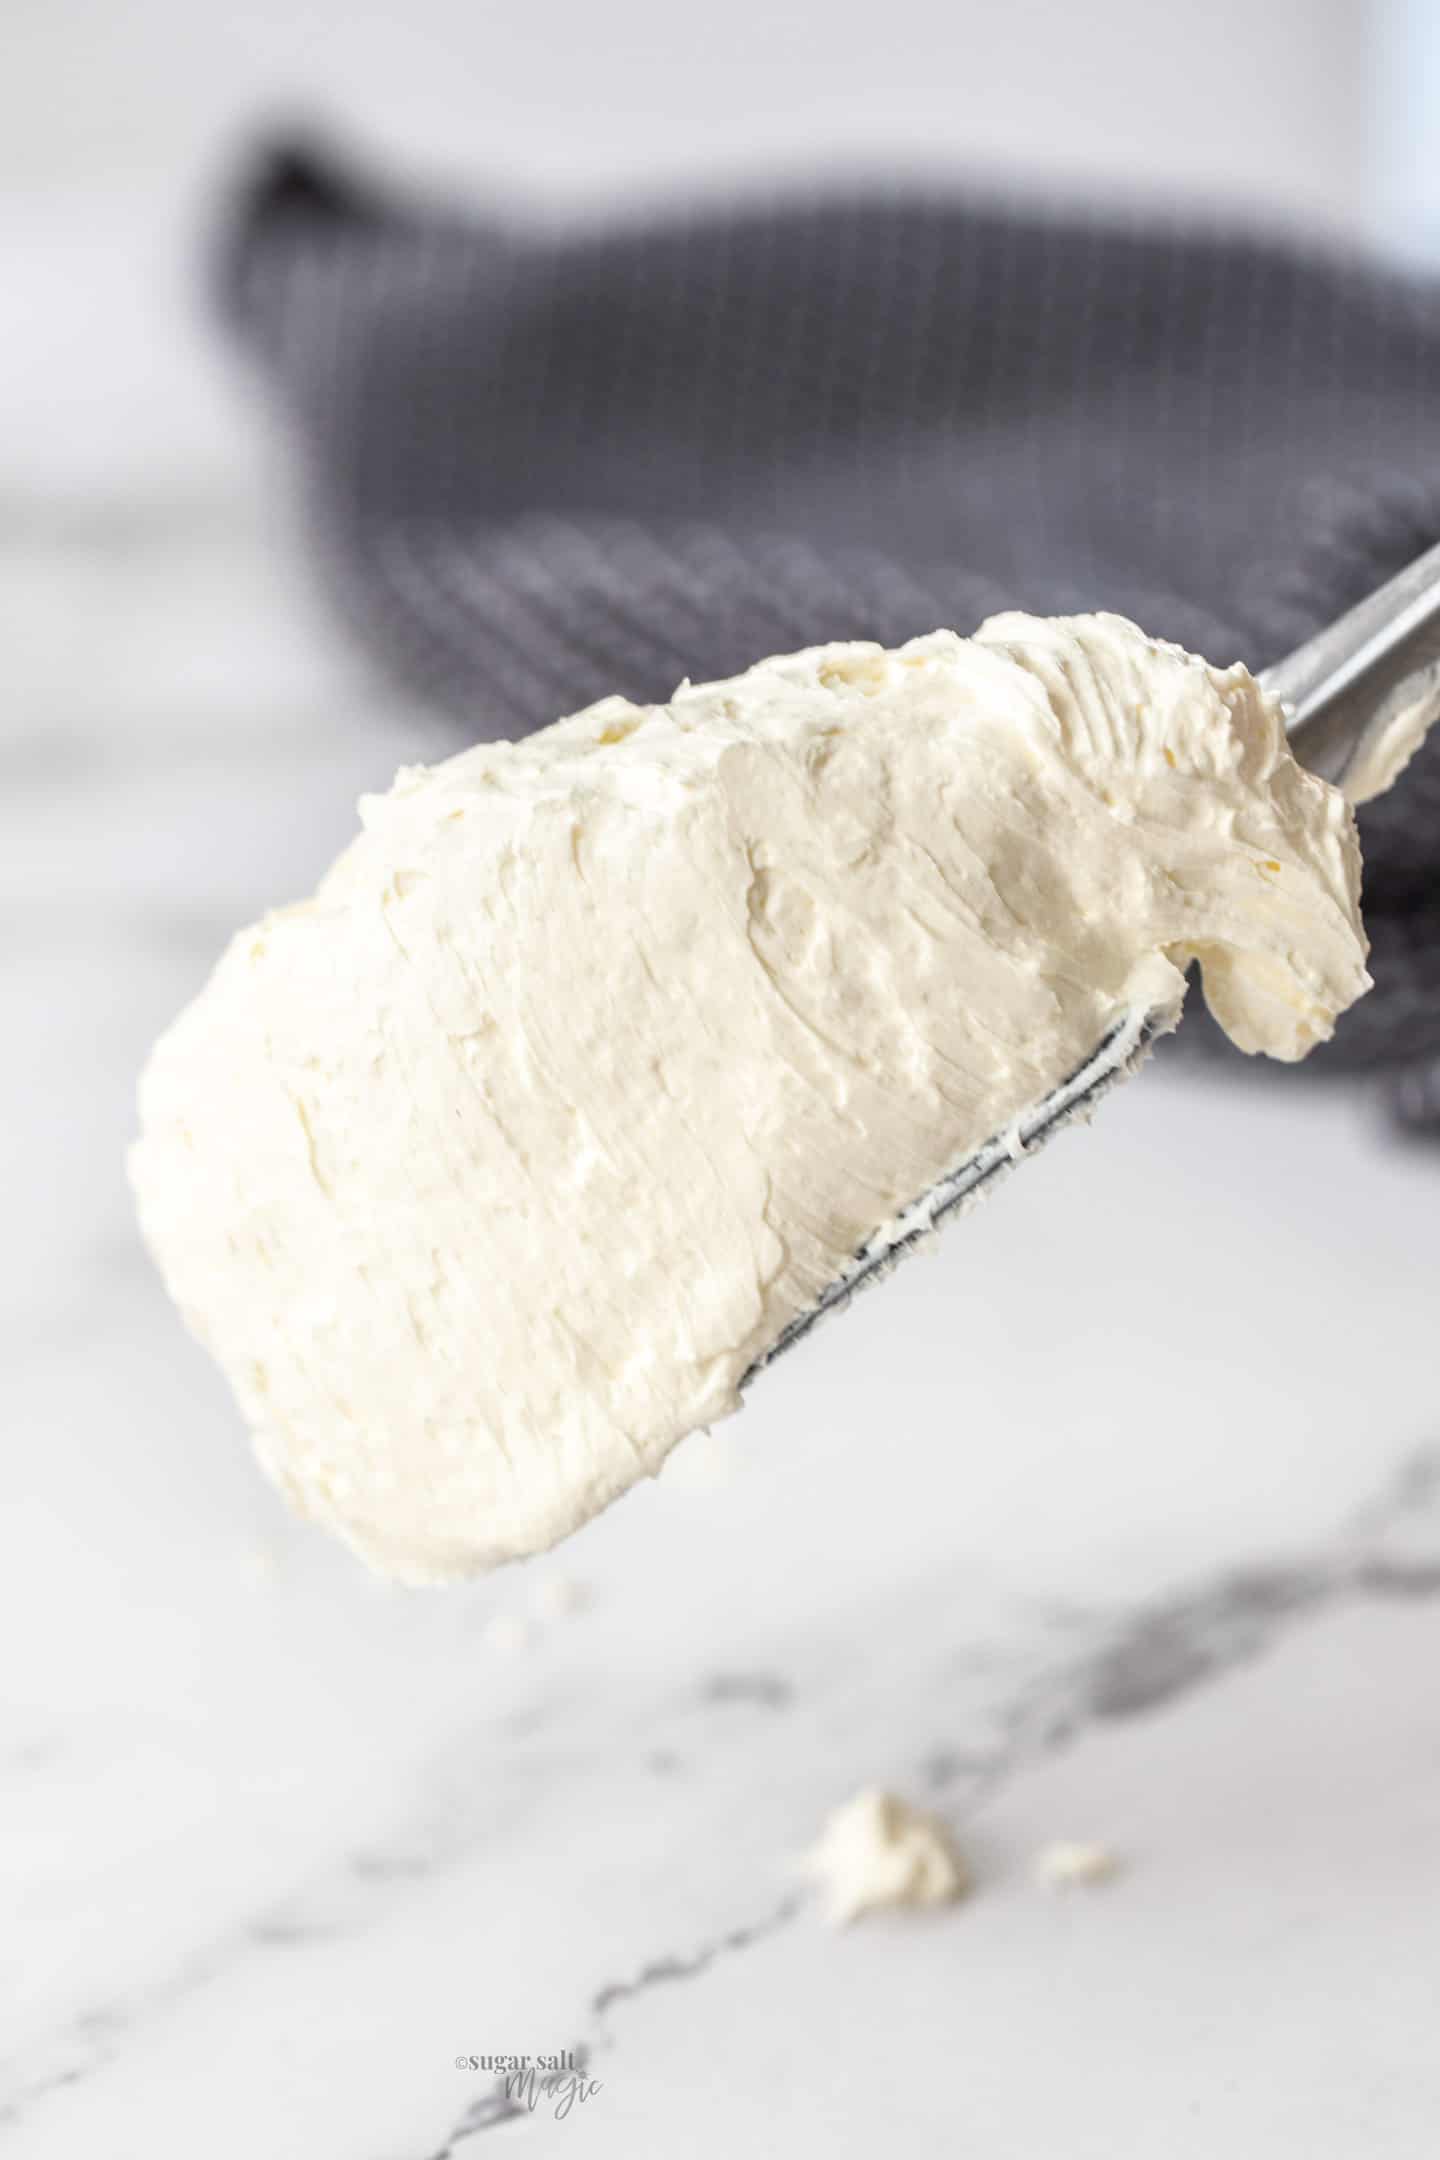 A spatula loaded with Swiss meringue buttercream.